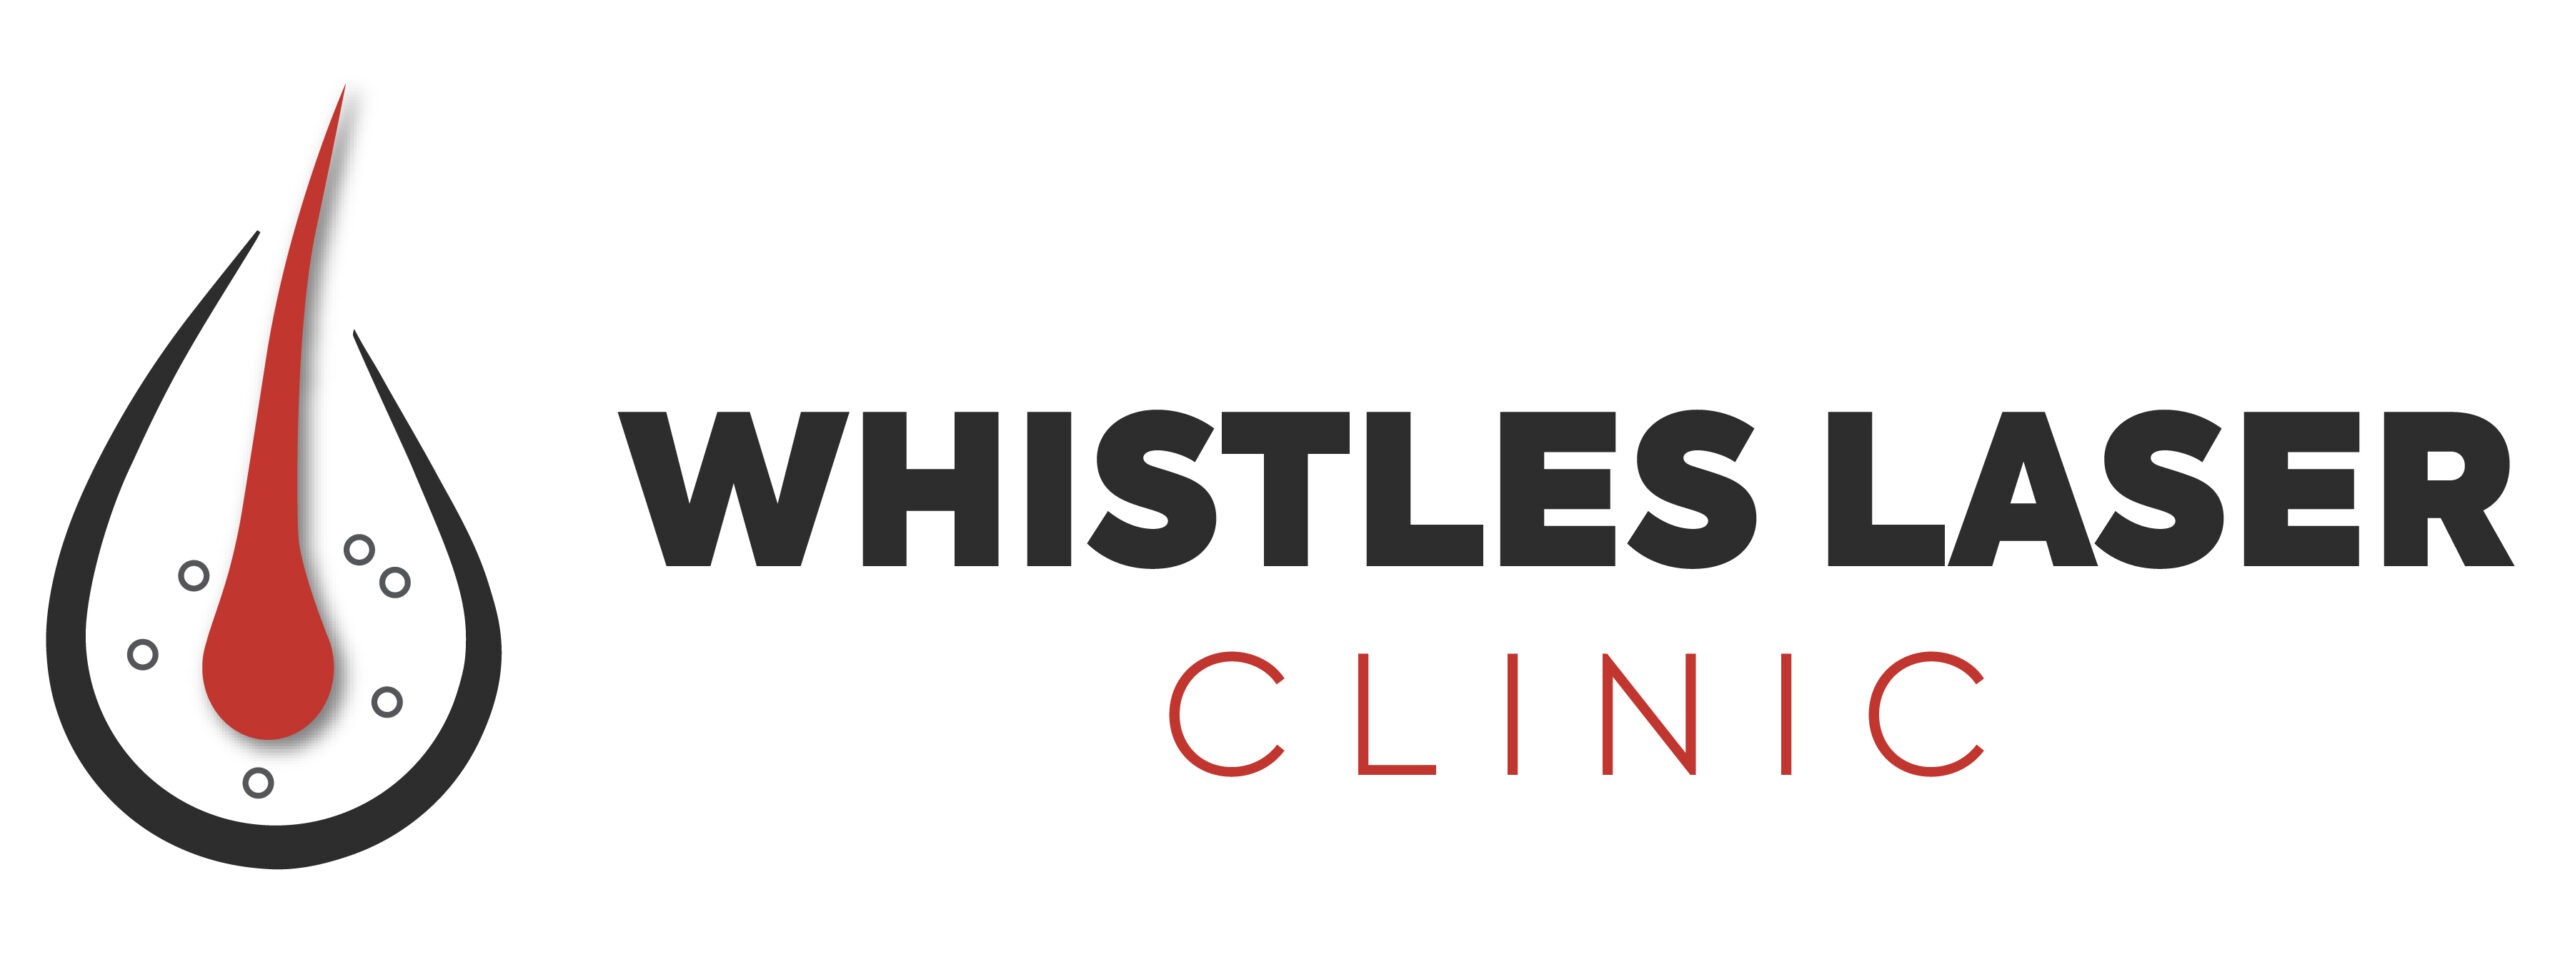 Whistles Laser Clinic Logo